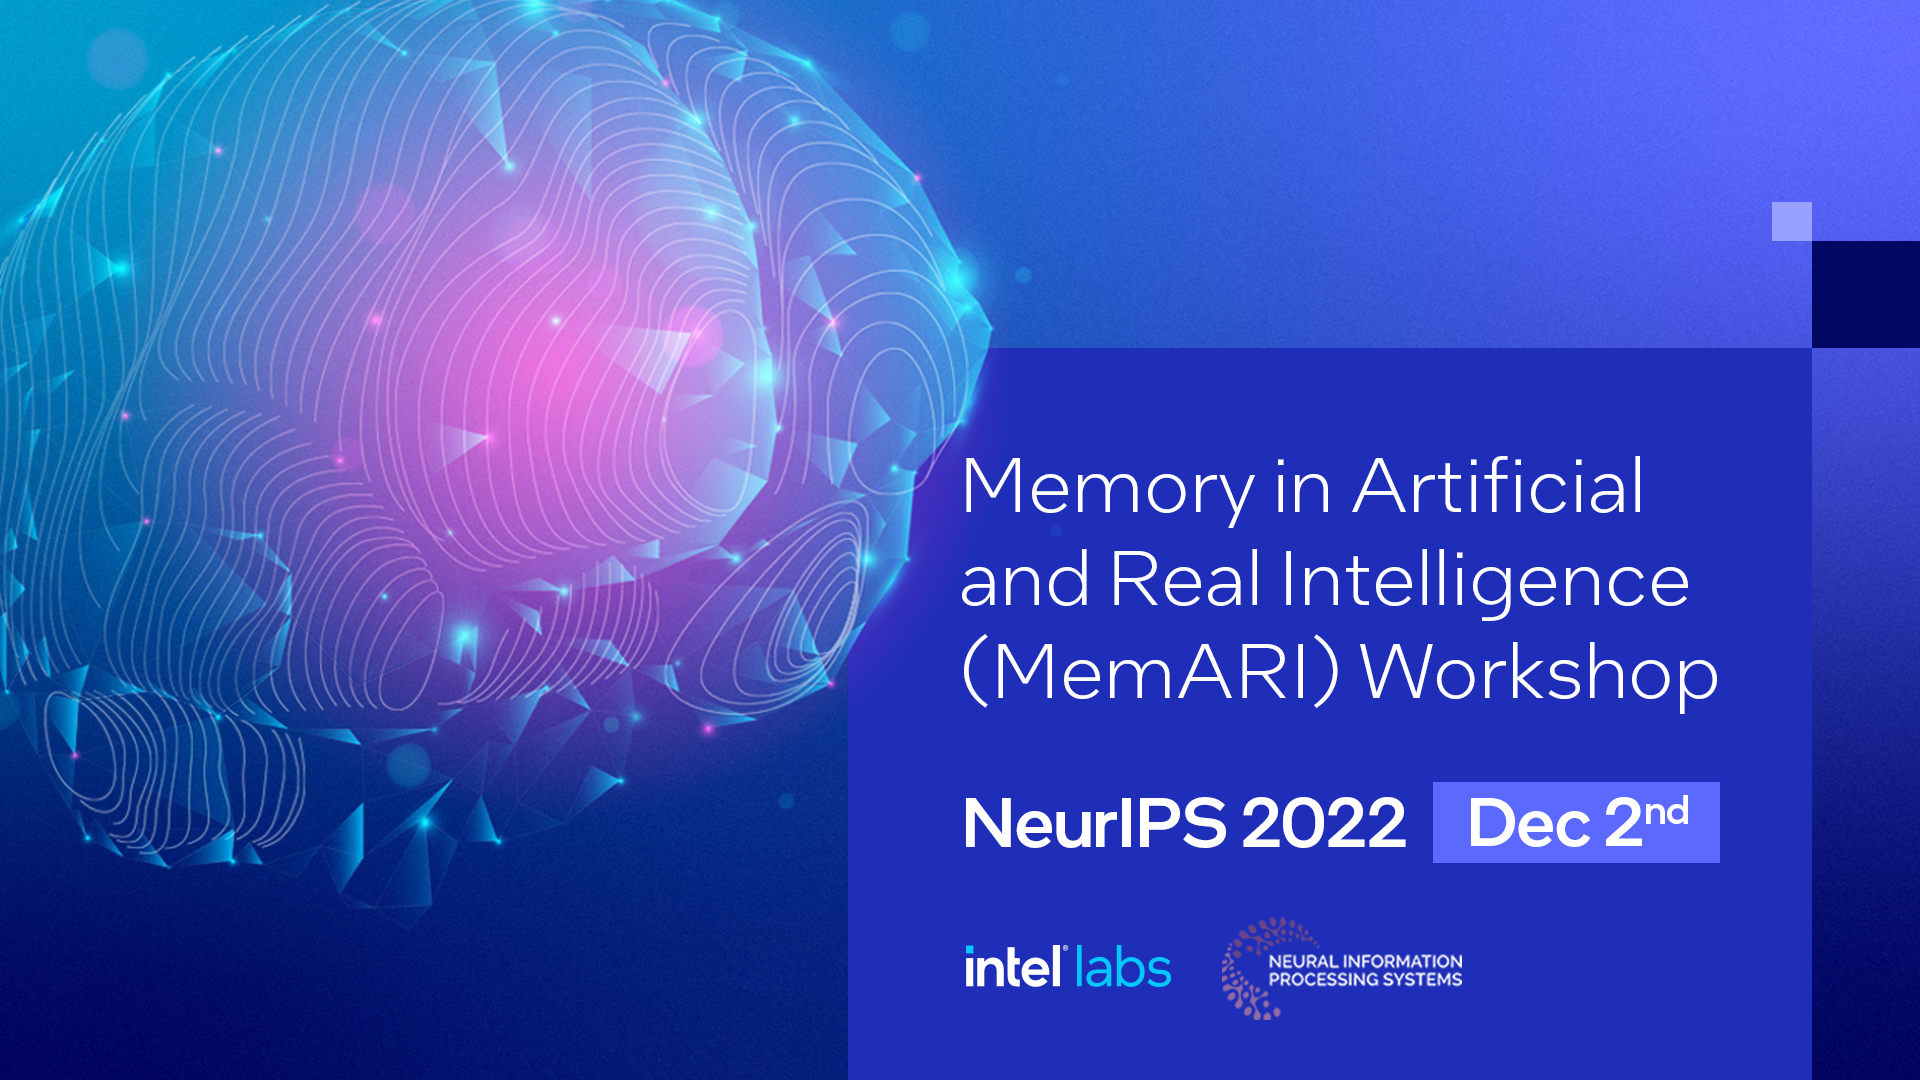 Memory in Artificial and Real Intelligence (MemARI) at NeurIPS